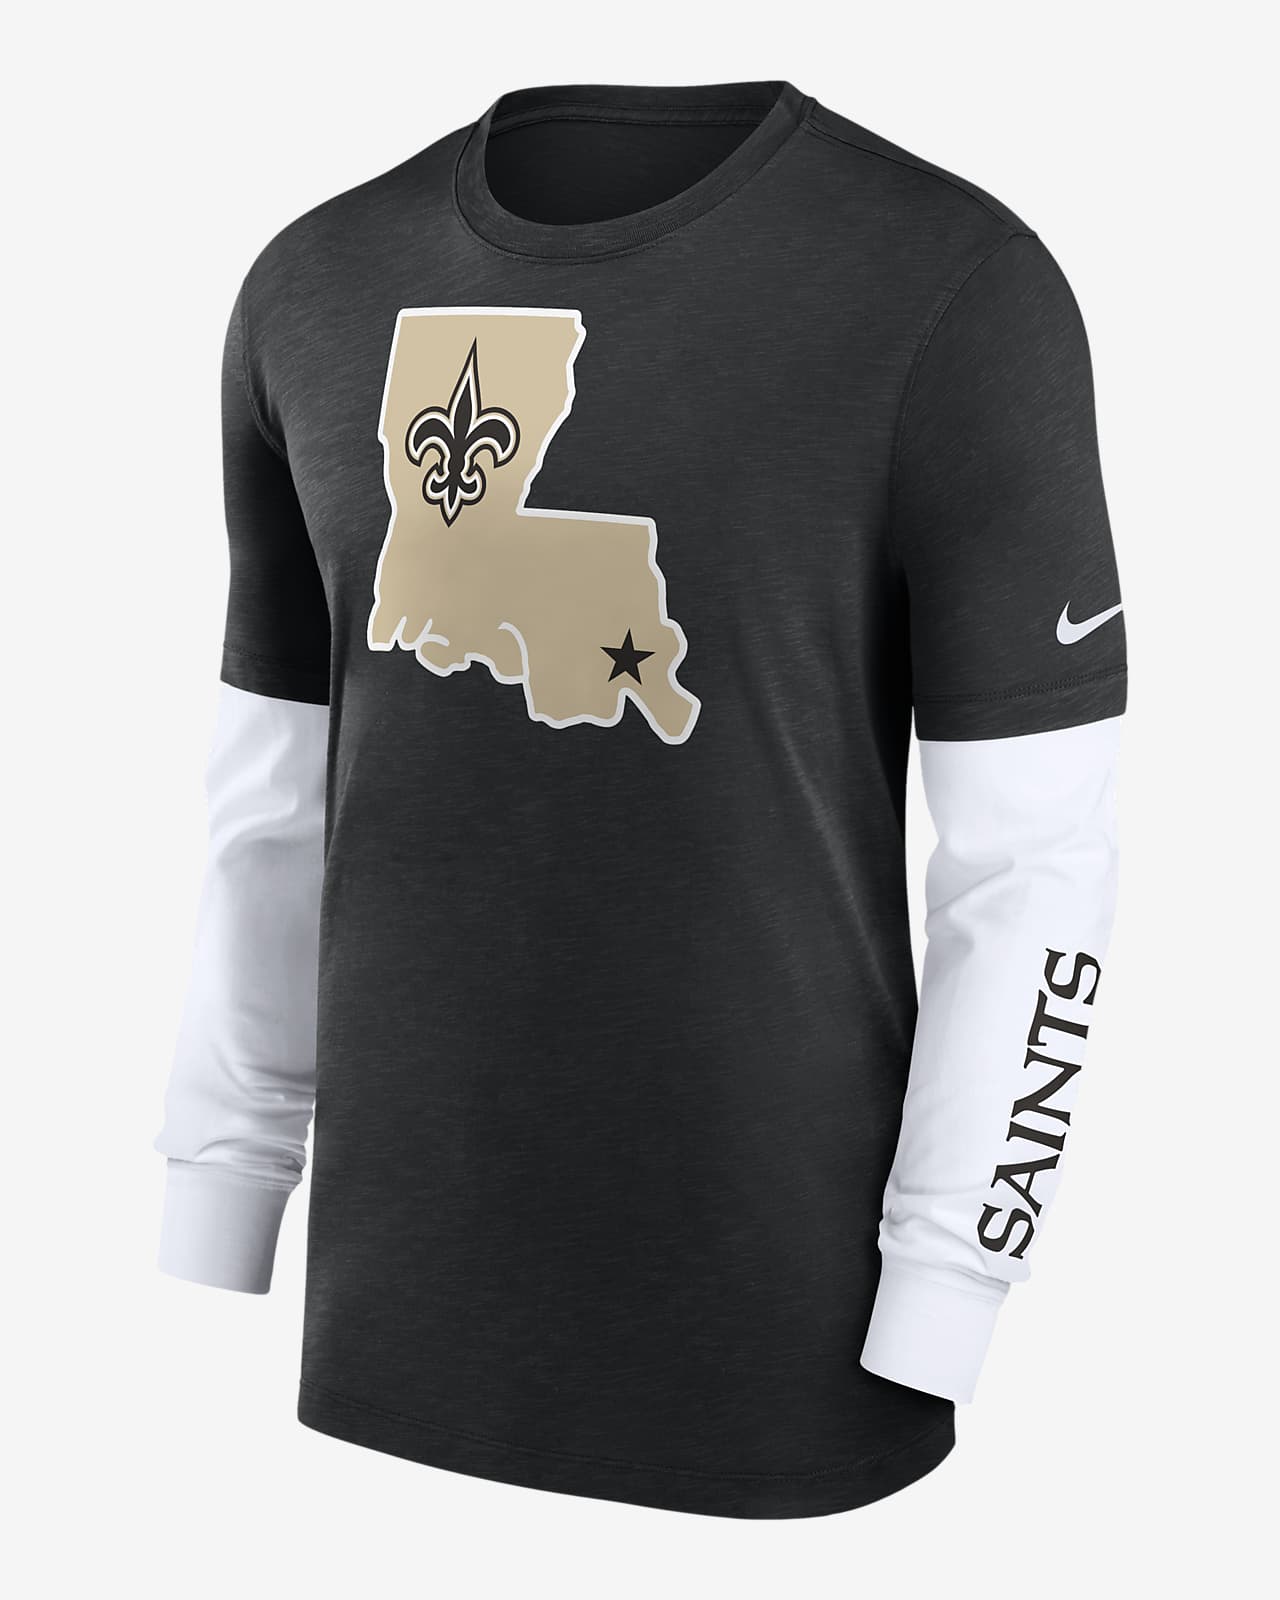 New Orleans Saints Men's Nike NFL Long-Sleeve Top